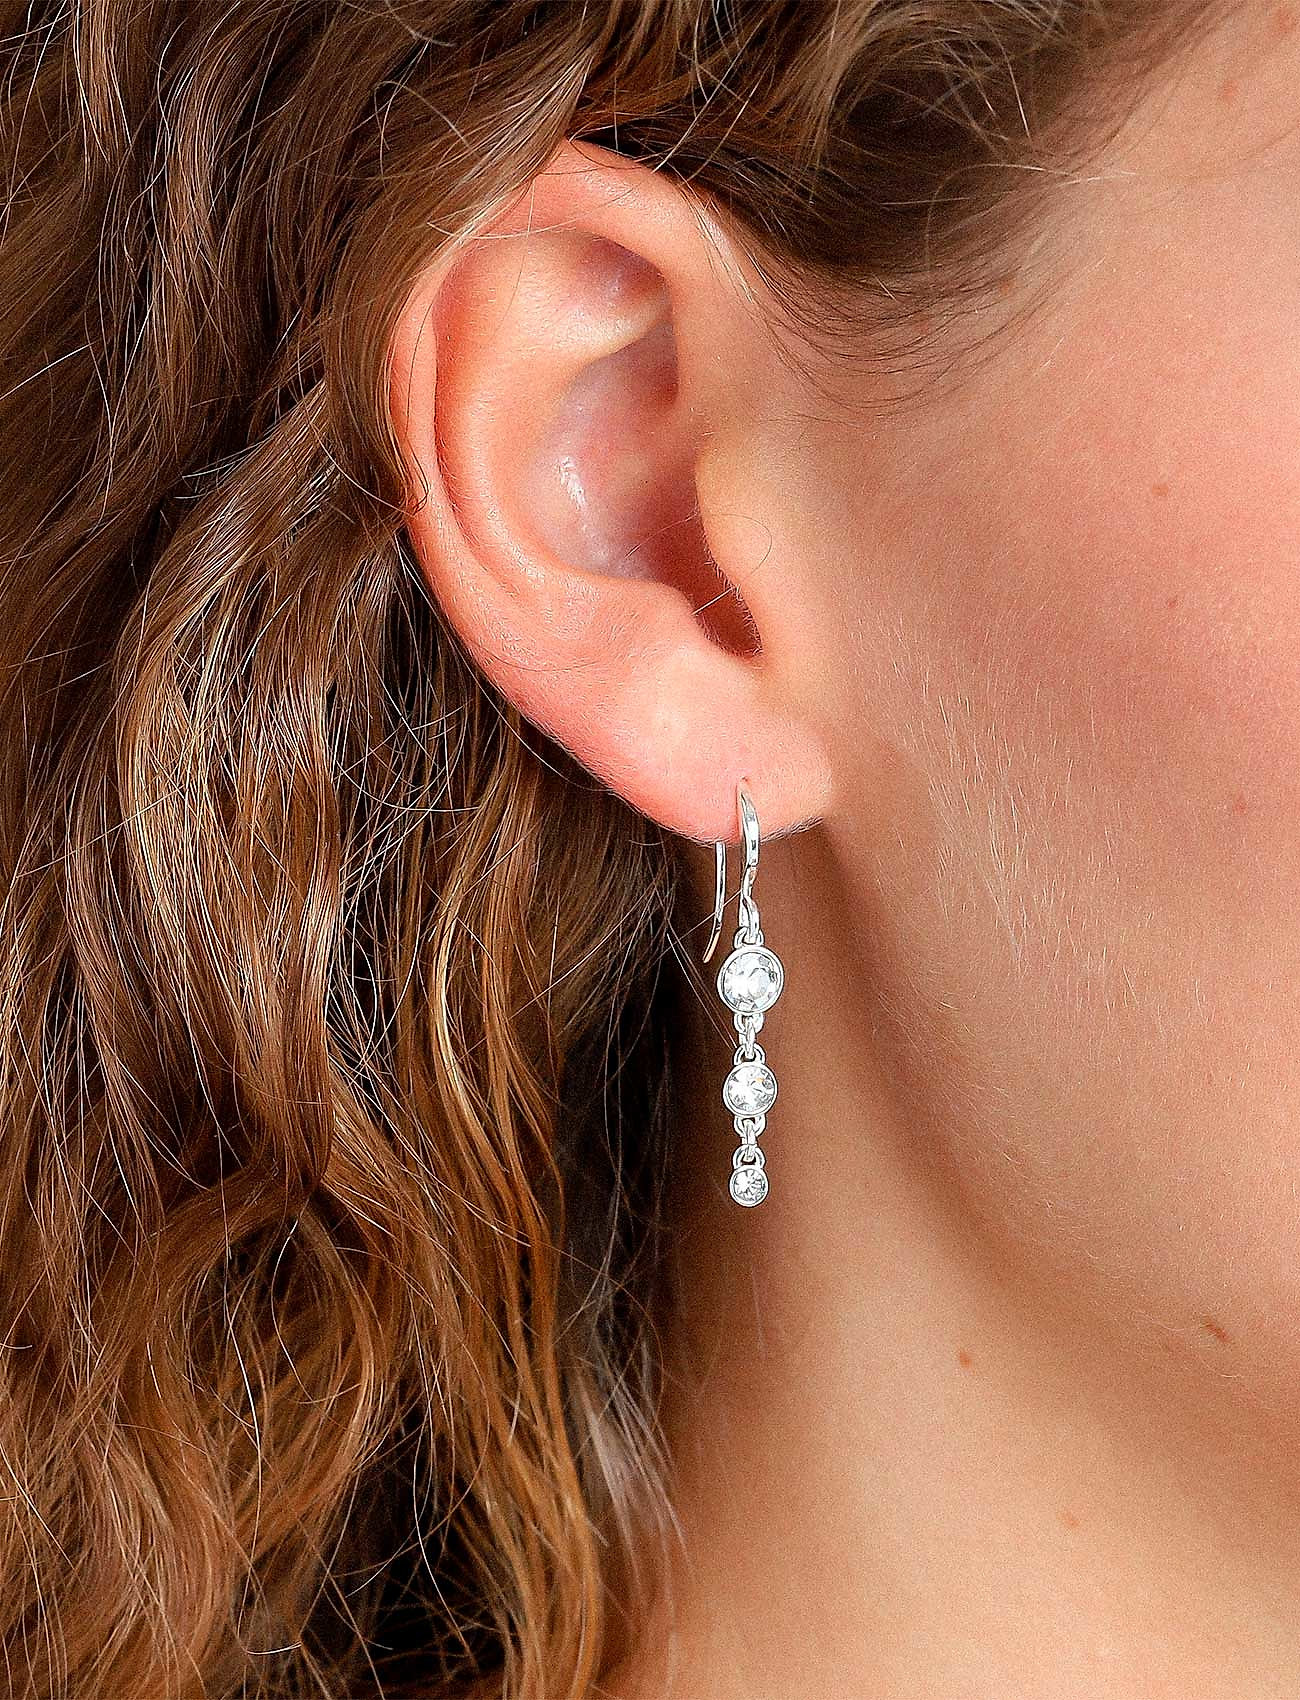 Pilgrim - Lucia - pendant earrings - silver plated - 0